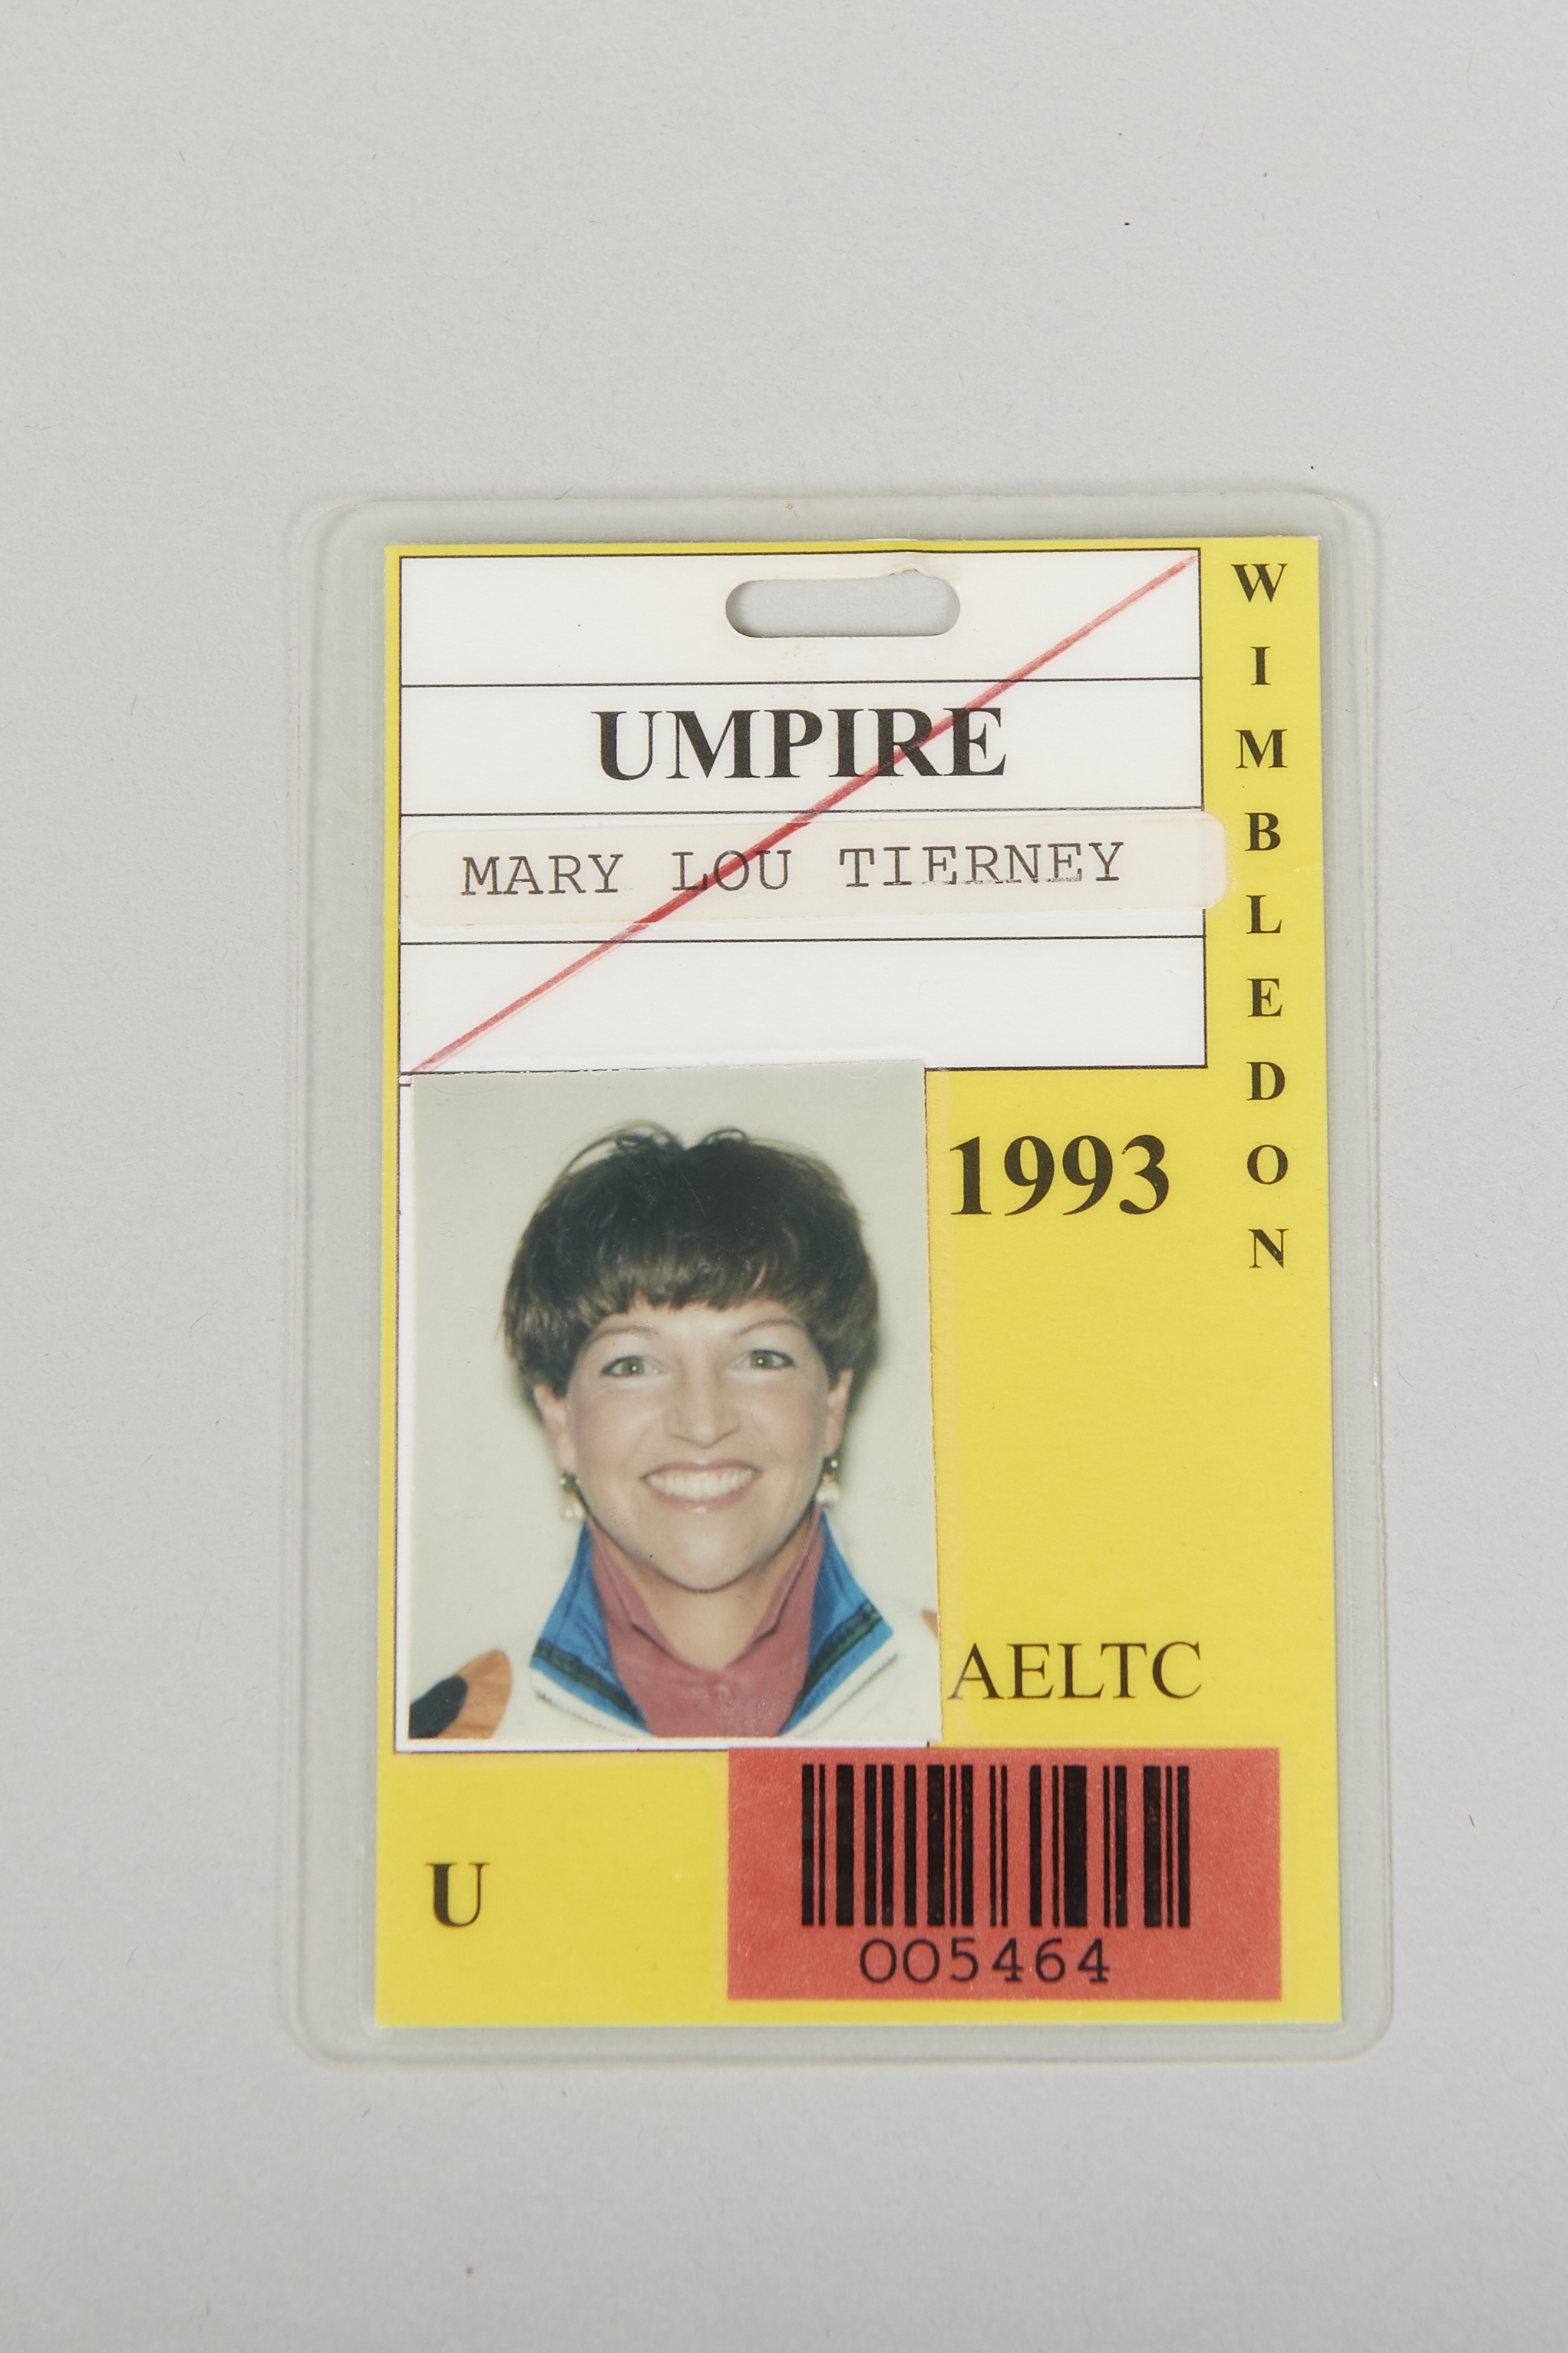 Wimbledon Umpire Identification Card,1993